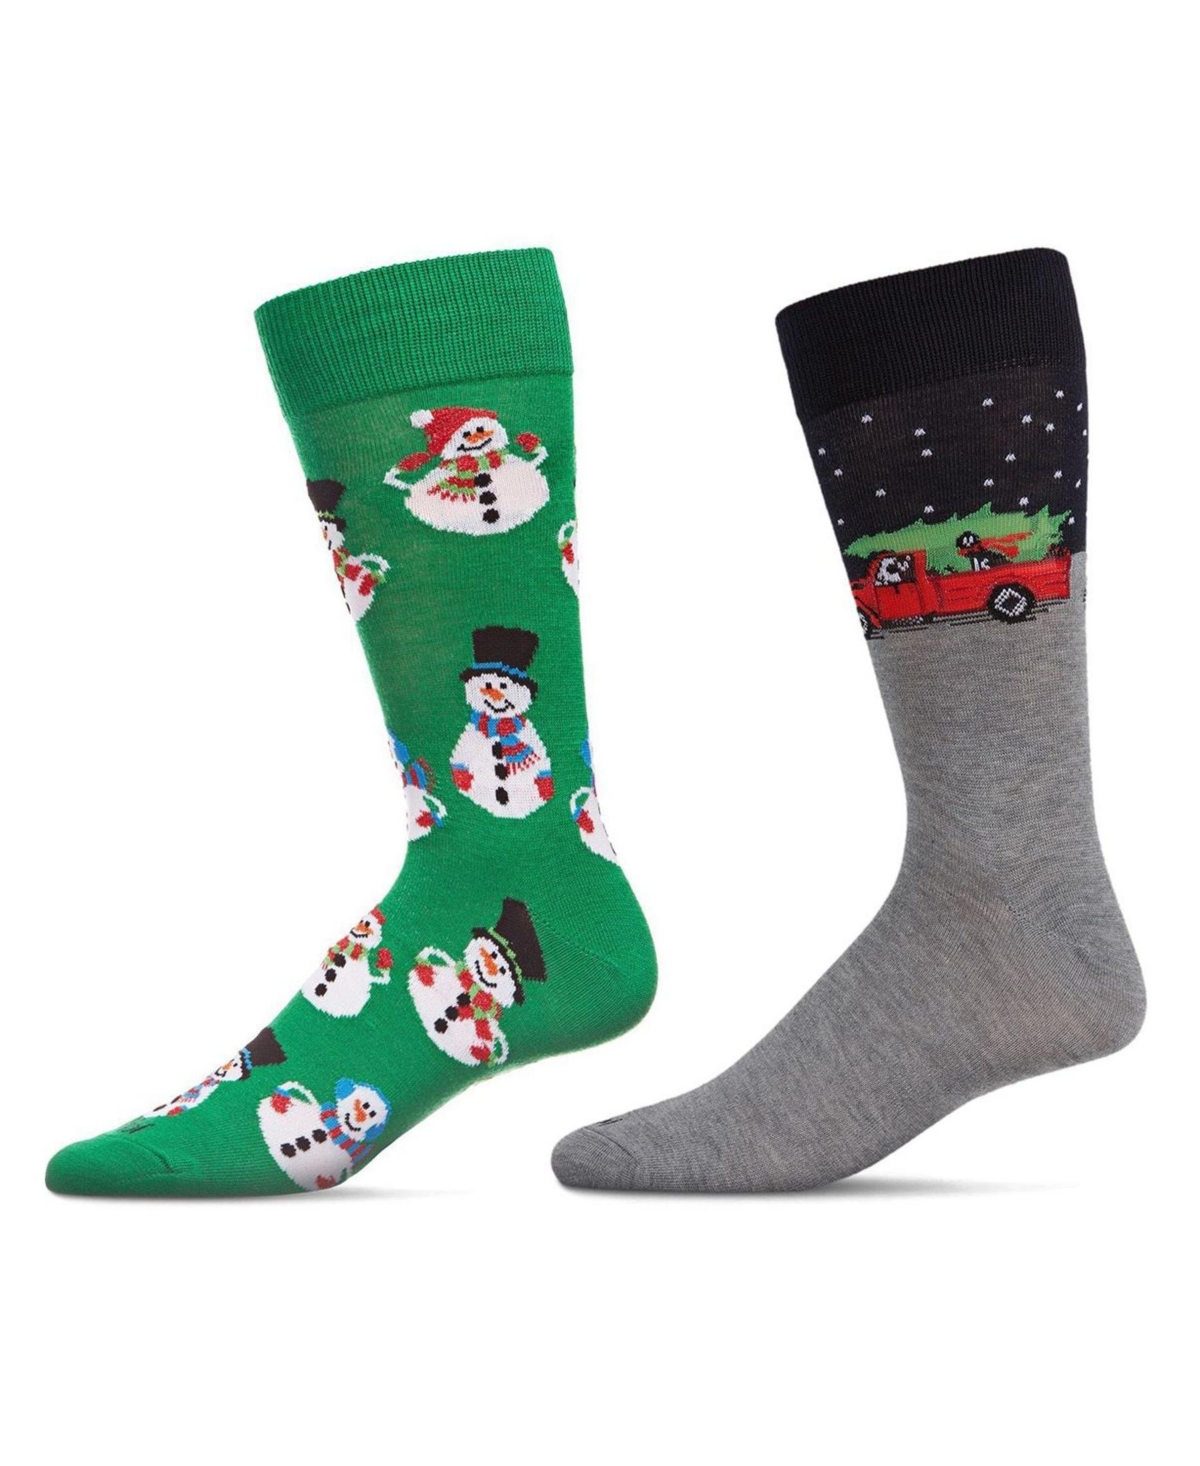 Men's Christmas Holiday Pair Novelty Socks, Pack of 2 - Green